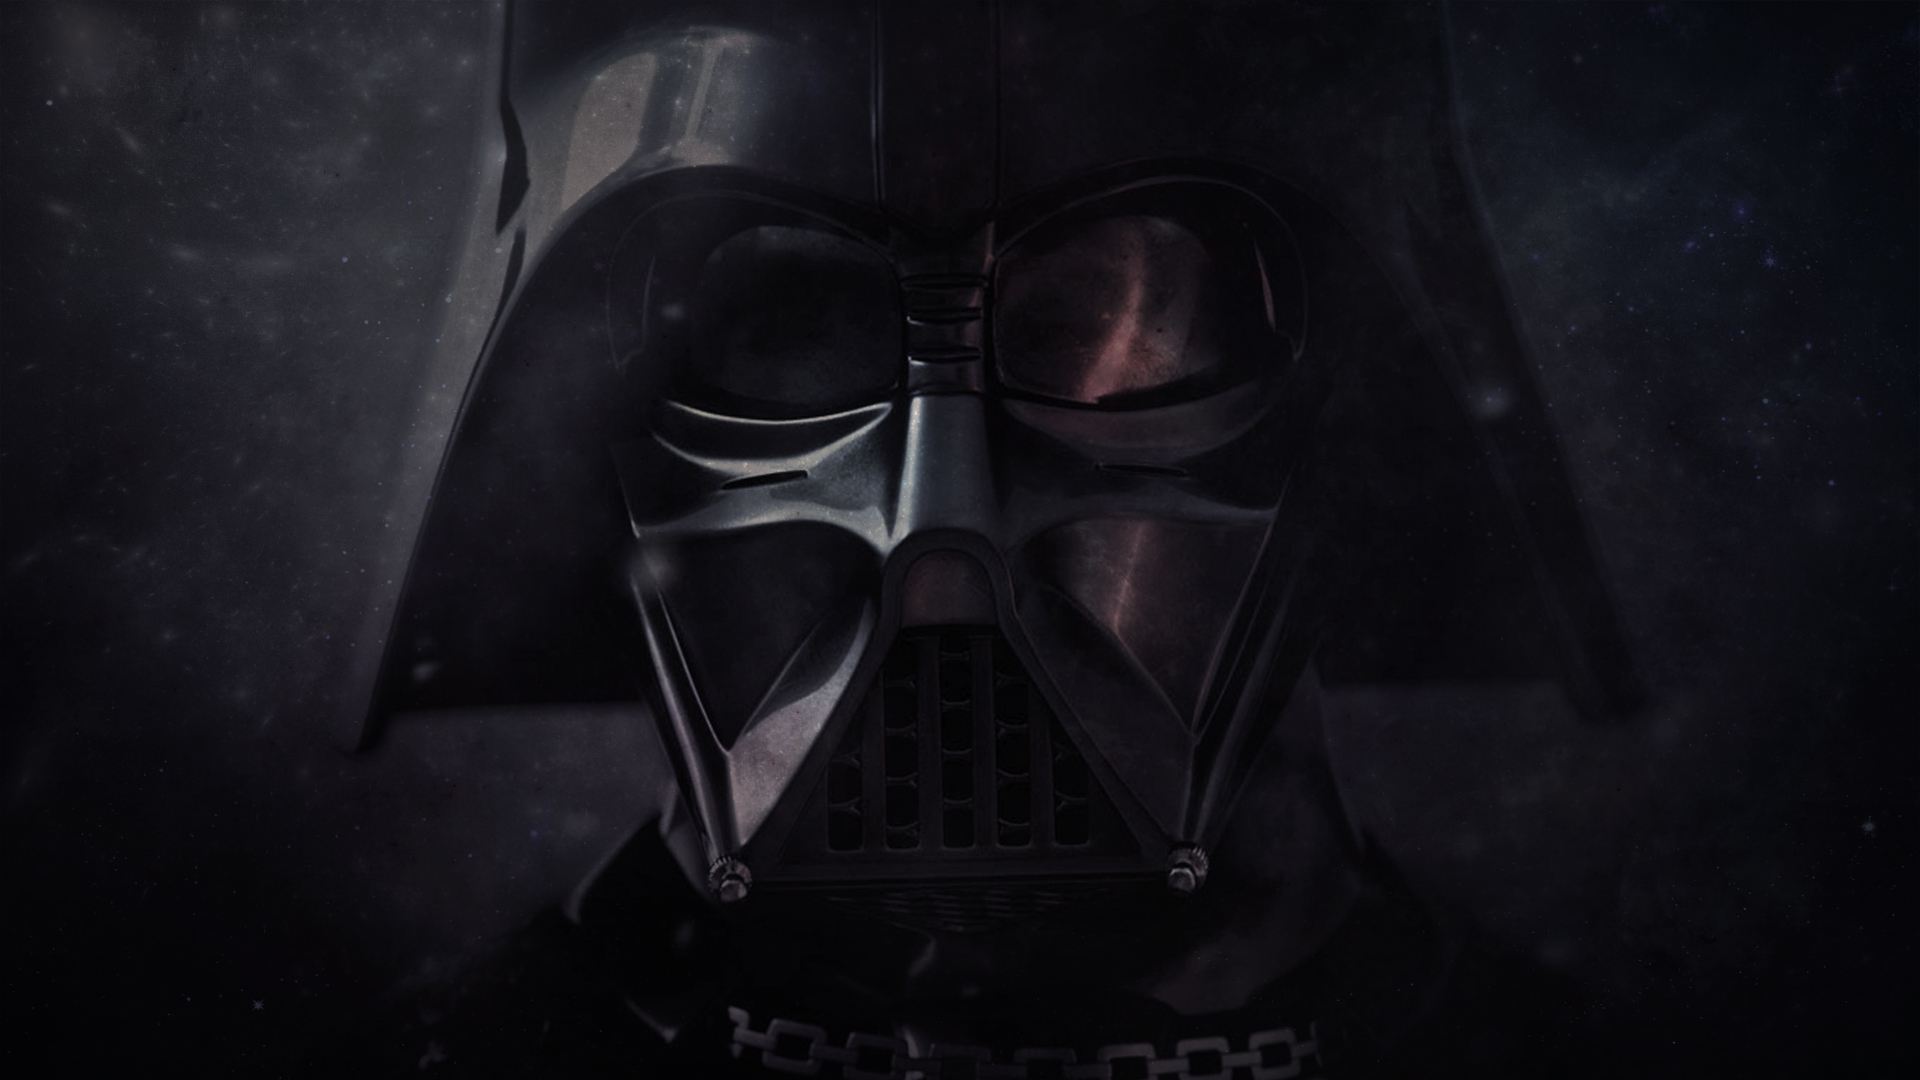 Wallpaper 1080p Darth Vader by iamsointense on deviantART